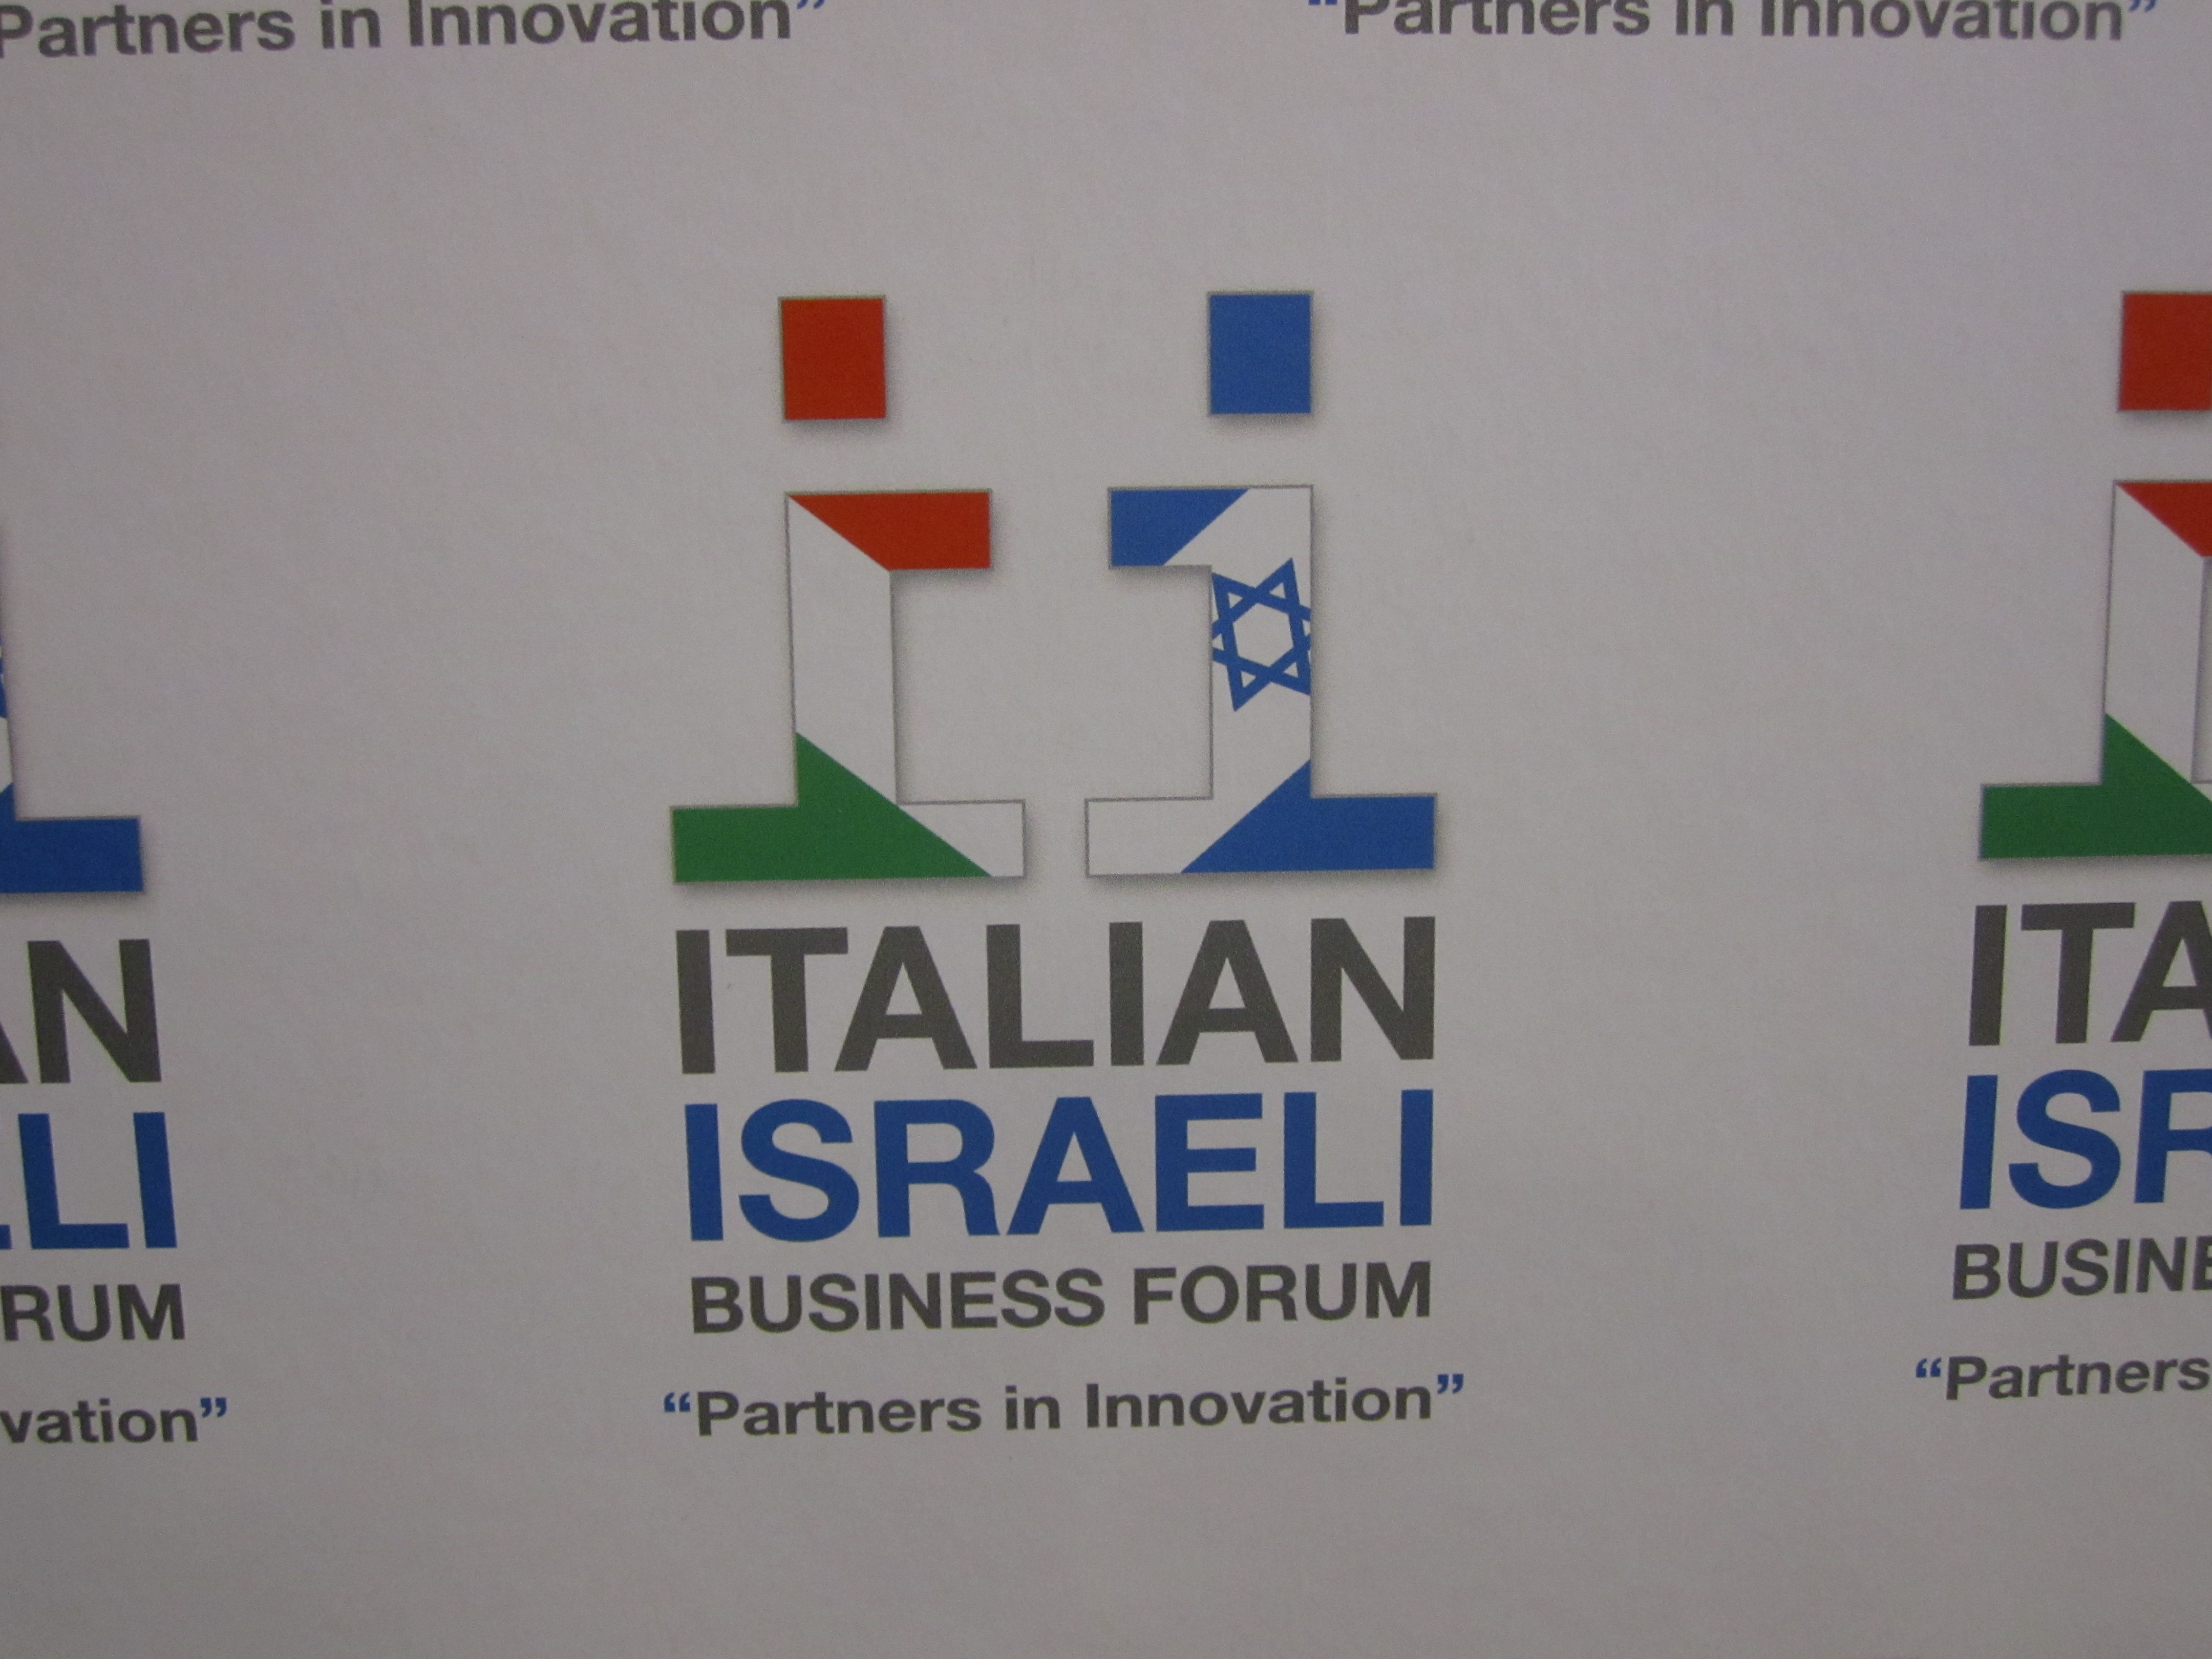 businessforum italy israel